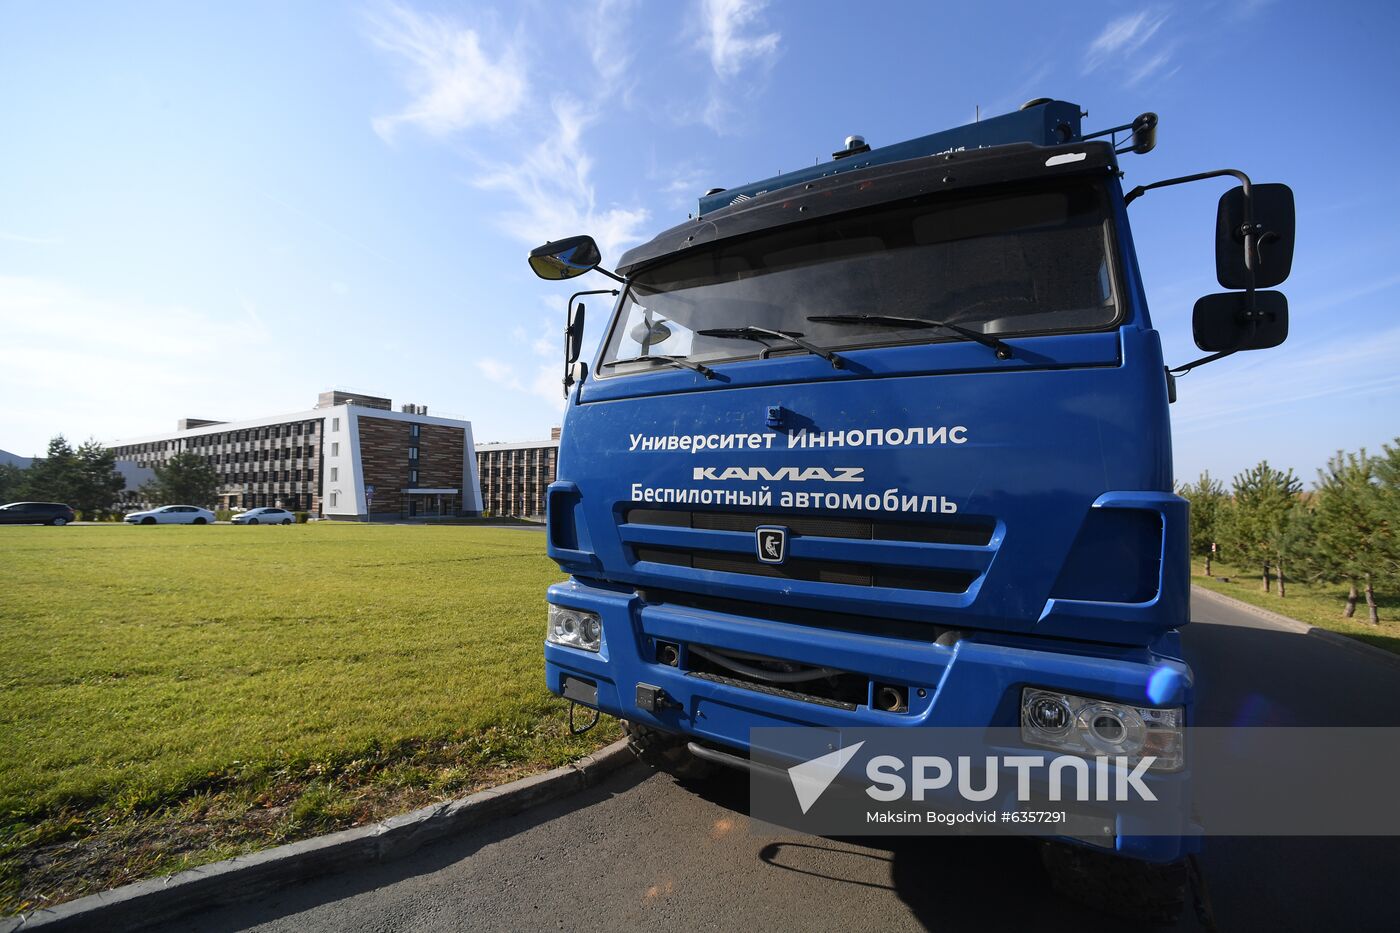 Russia Self-driving Truck